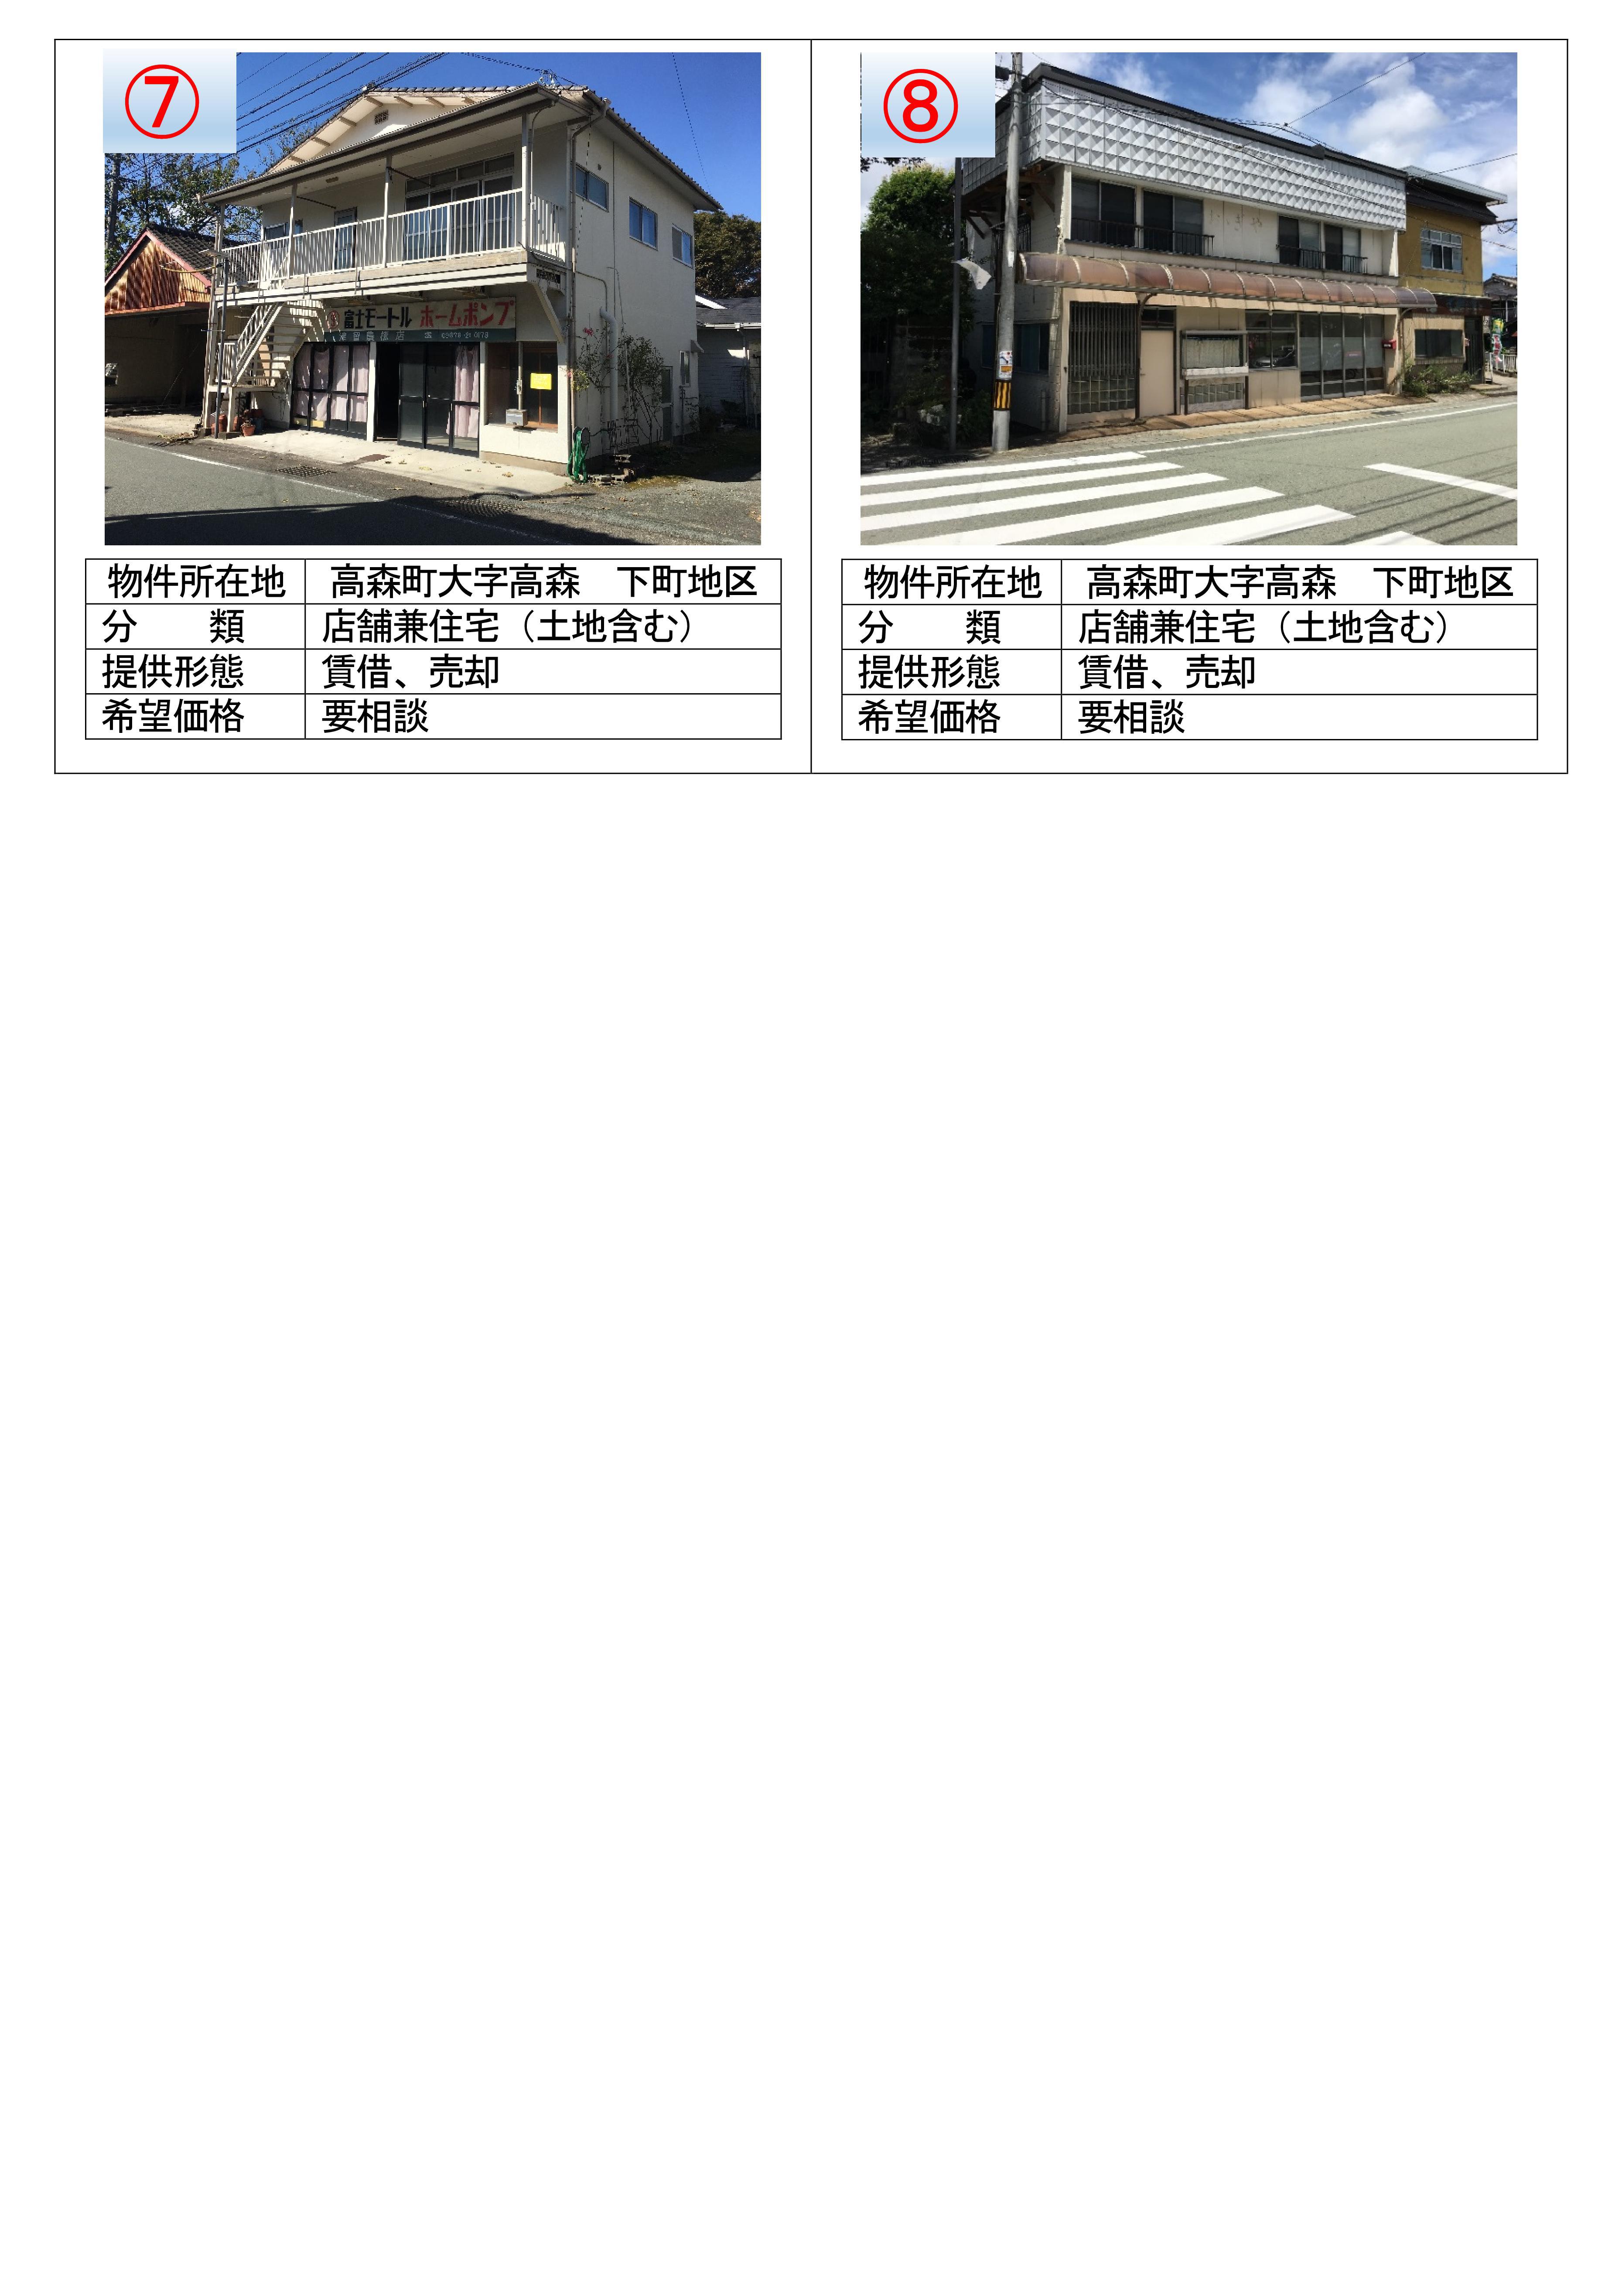 http://www.town.takamori.kumamoto.jp/chosha/seisaku/upload/0d1e020f2582bcd4c12ee8781253289cda4e4d92.jpg